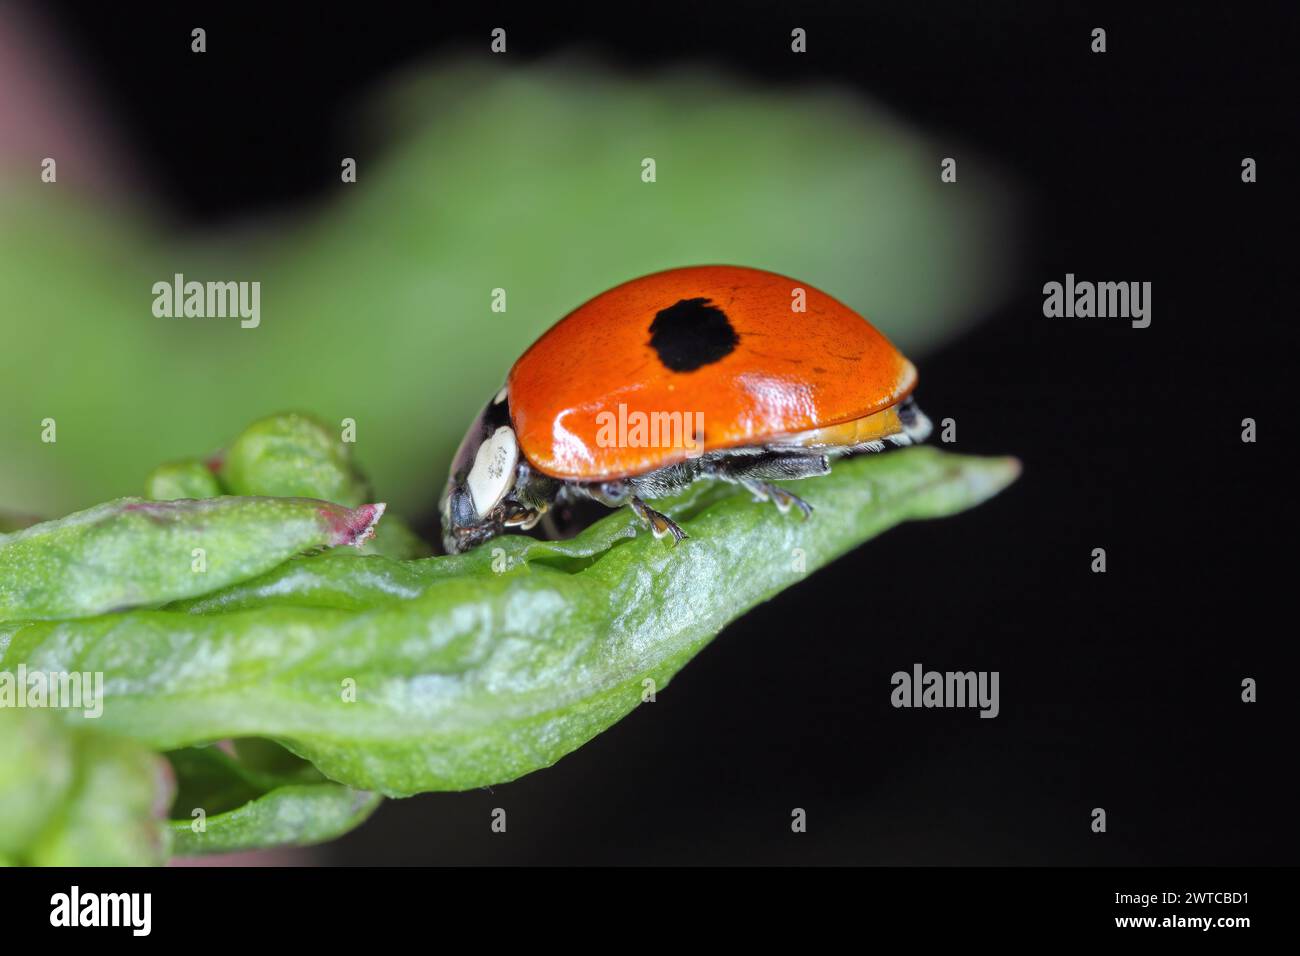 Two spotted lady beetle (Adalia bipunctata) on green leaf. Stock Photo